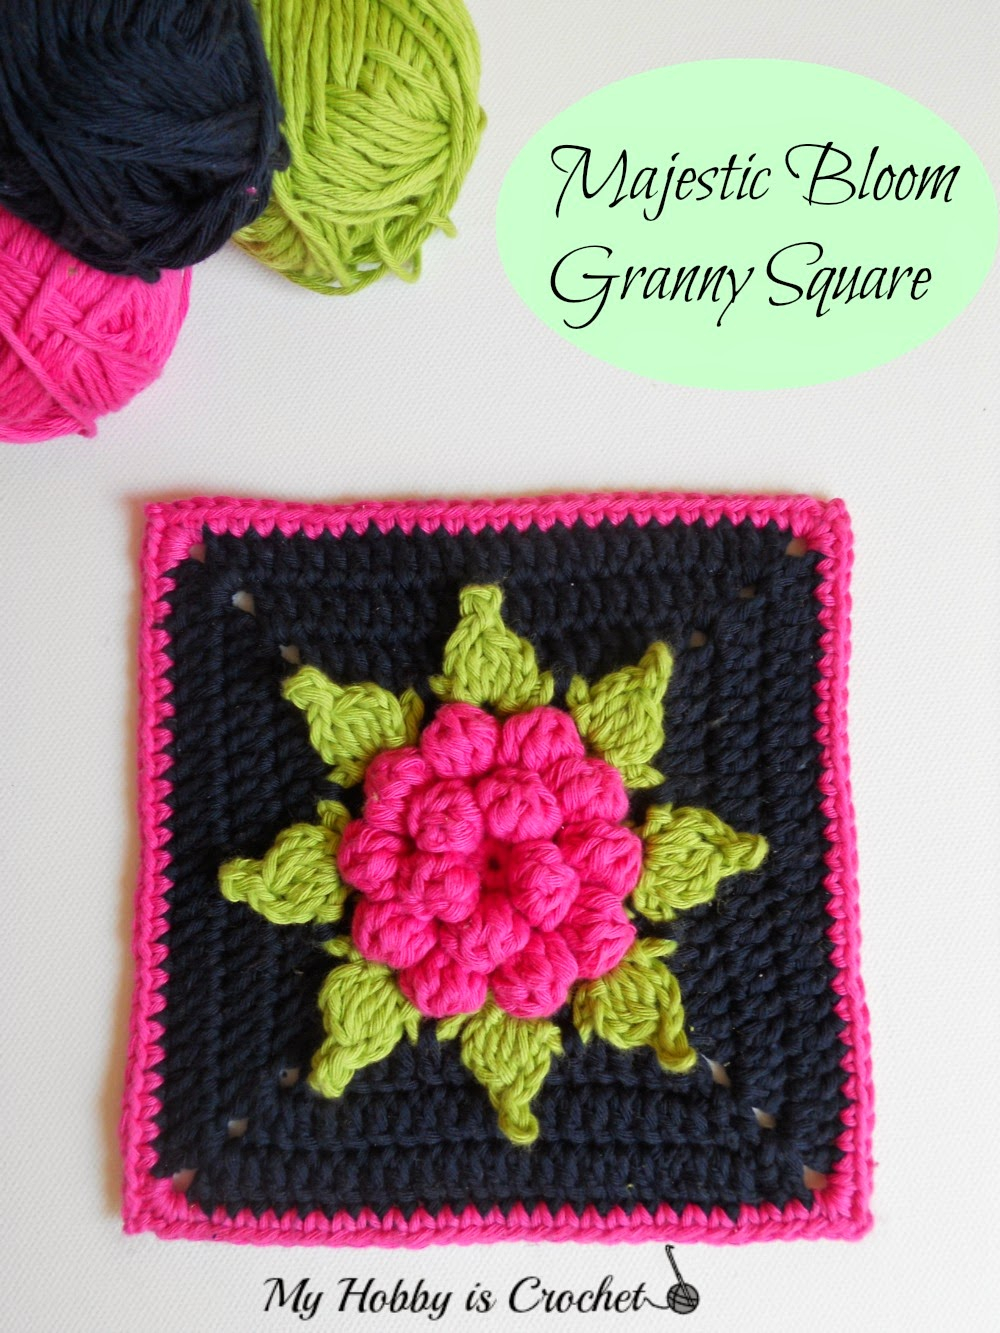 12 Granny Square Crochet Pattern Majestic Bloom Granny Square Free Crochet Pattern With Tutorial